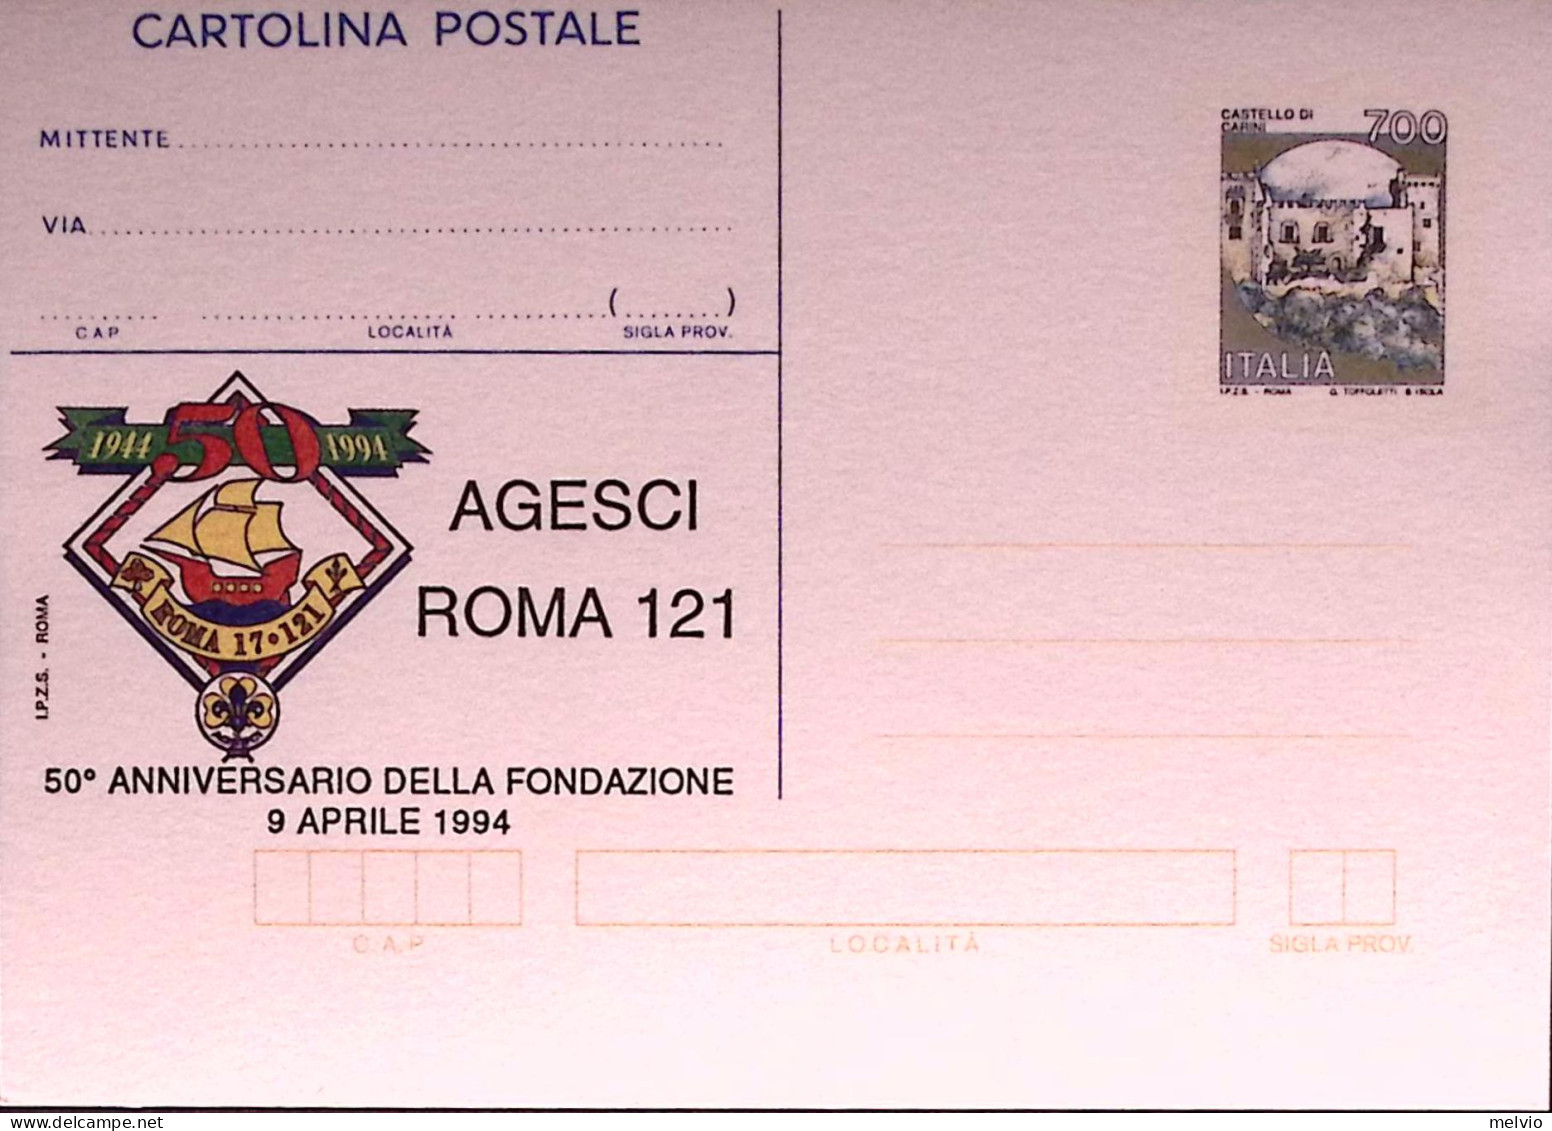 1994-AGESCI ROMA 121 Cartolina Postale IPZS Lire 700 Nuova - Stamped Stationery